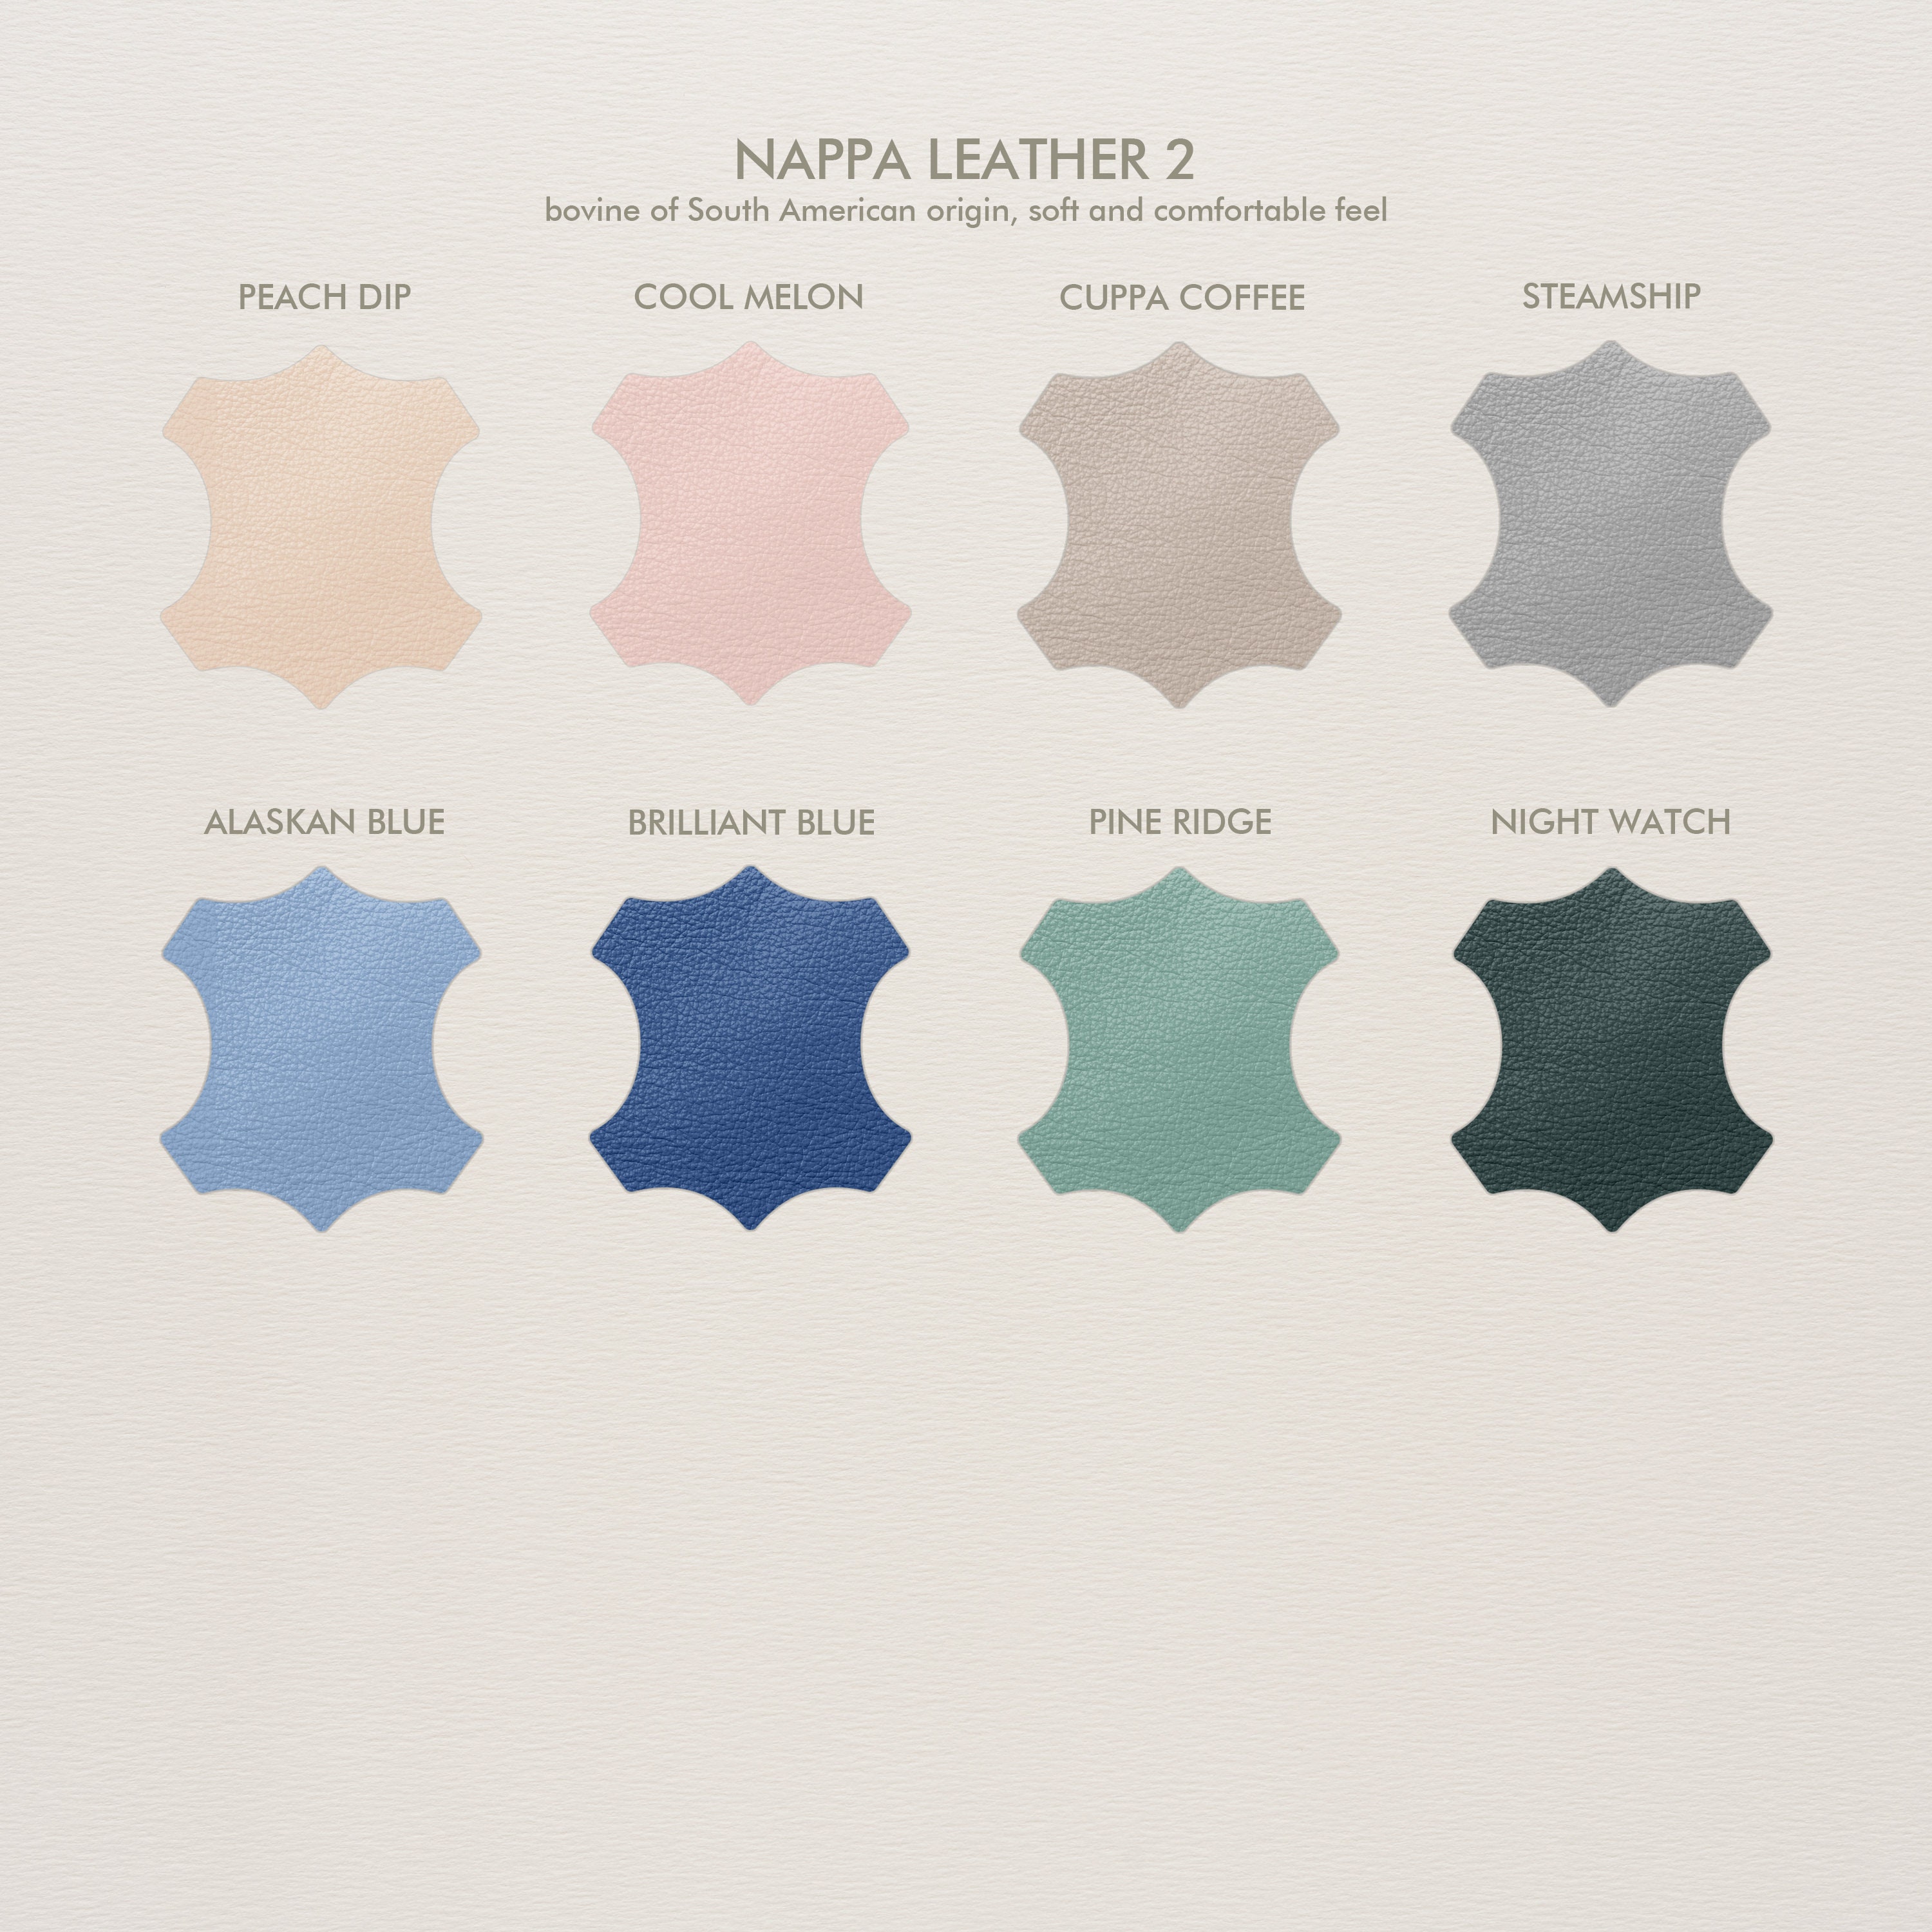 Classic Leather D Ring 12X12 - (Scrapbook) Album - Lilac - 842715057234